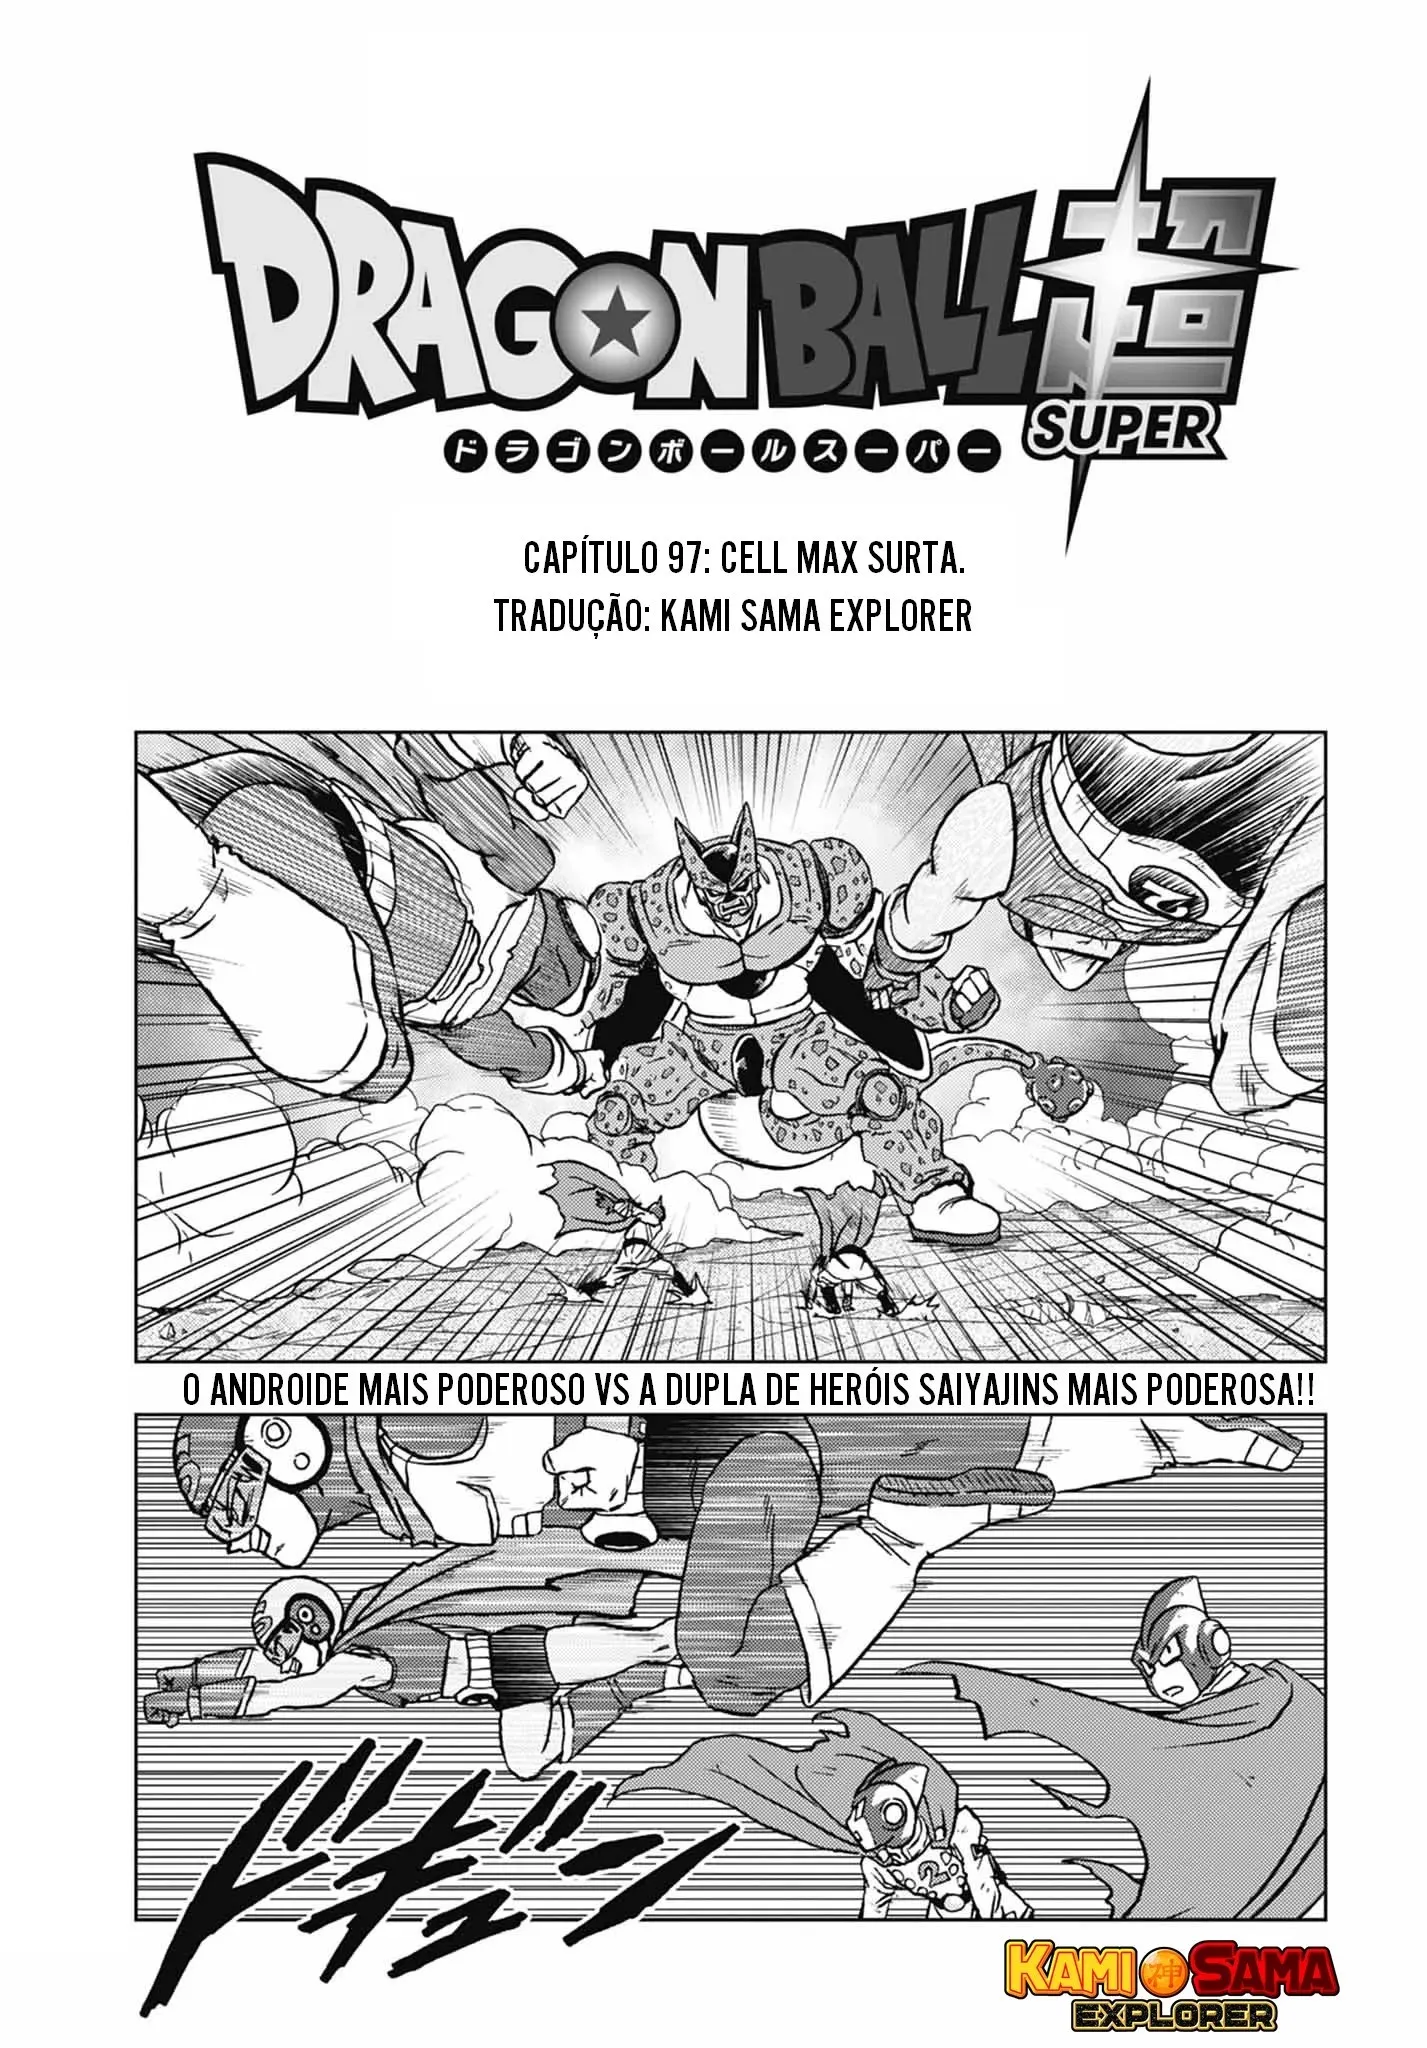 DRAGON BALL SUPER MANGA CAP 76, Completo e Traduzido Pt-Br